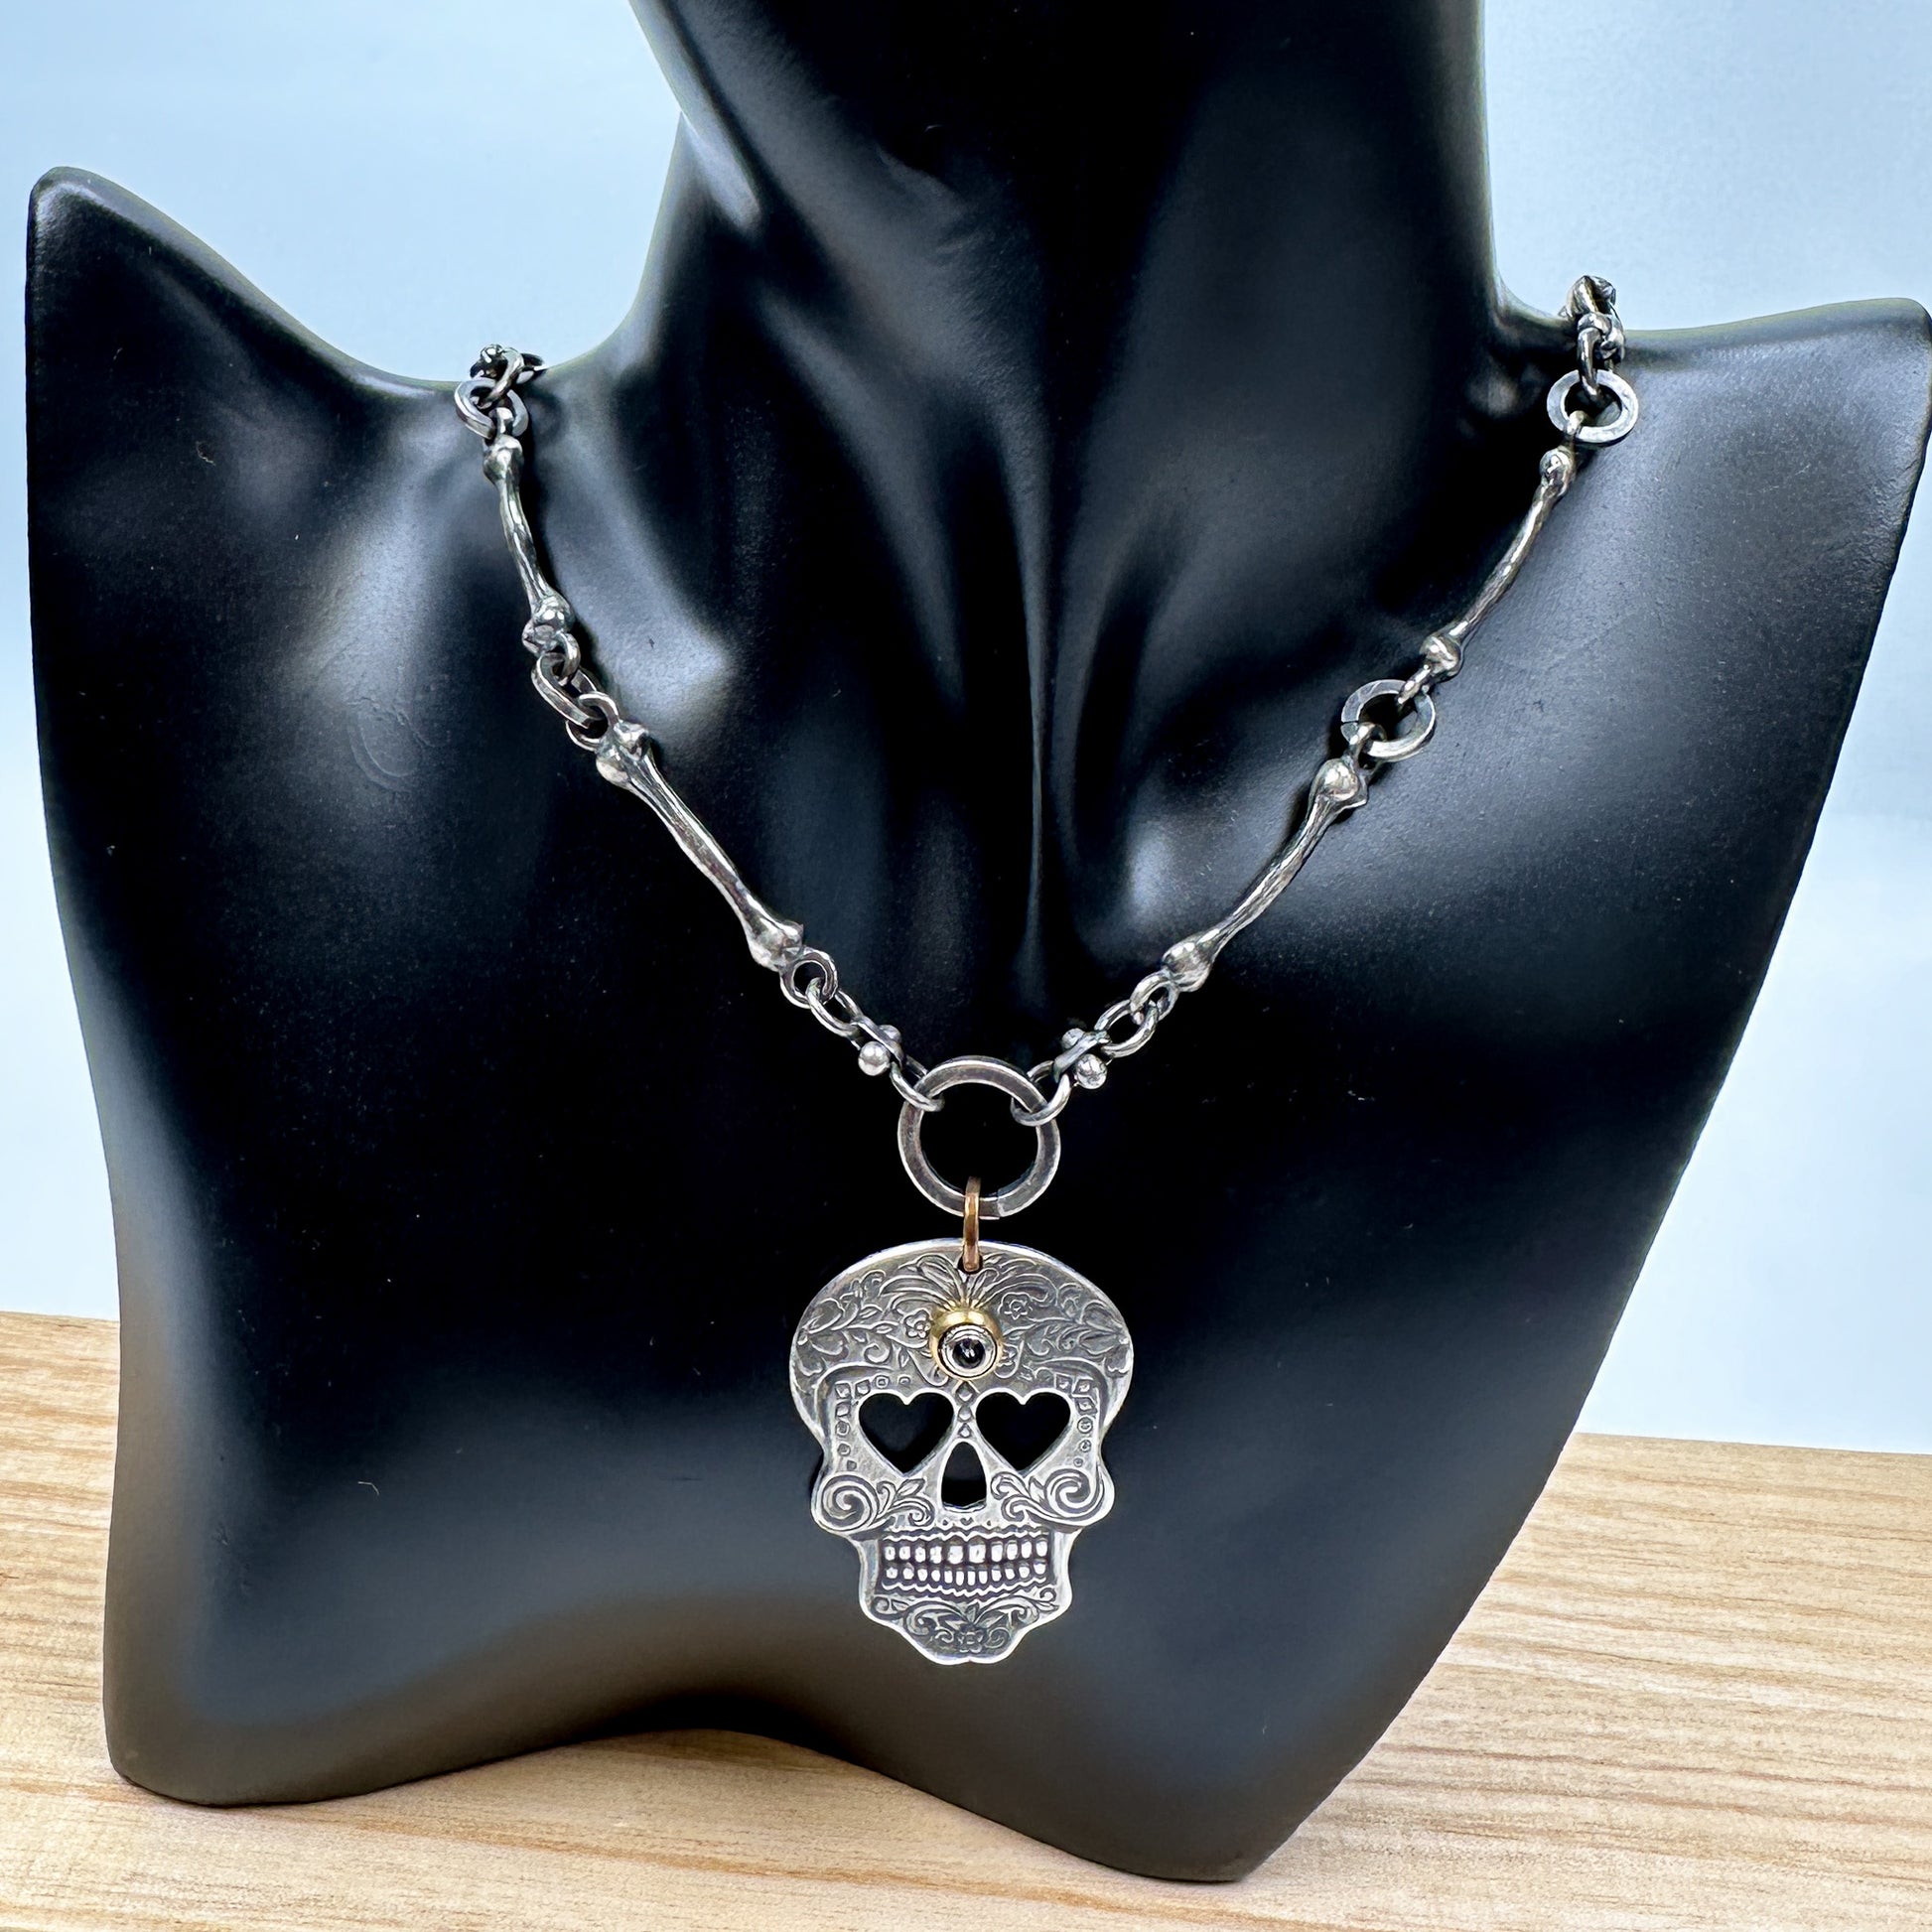 33" Sugar Skull Drop Mixed Metal Necklace - 1 pc.-The Bead Gallery Honolulu